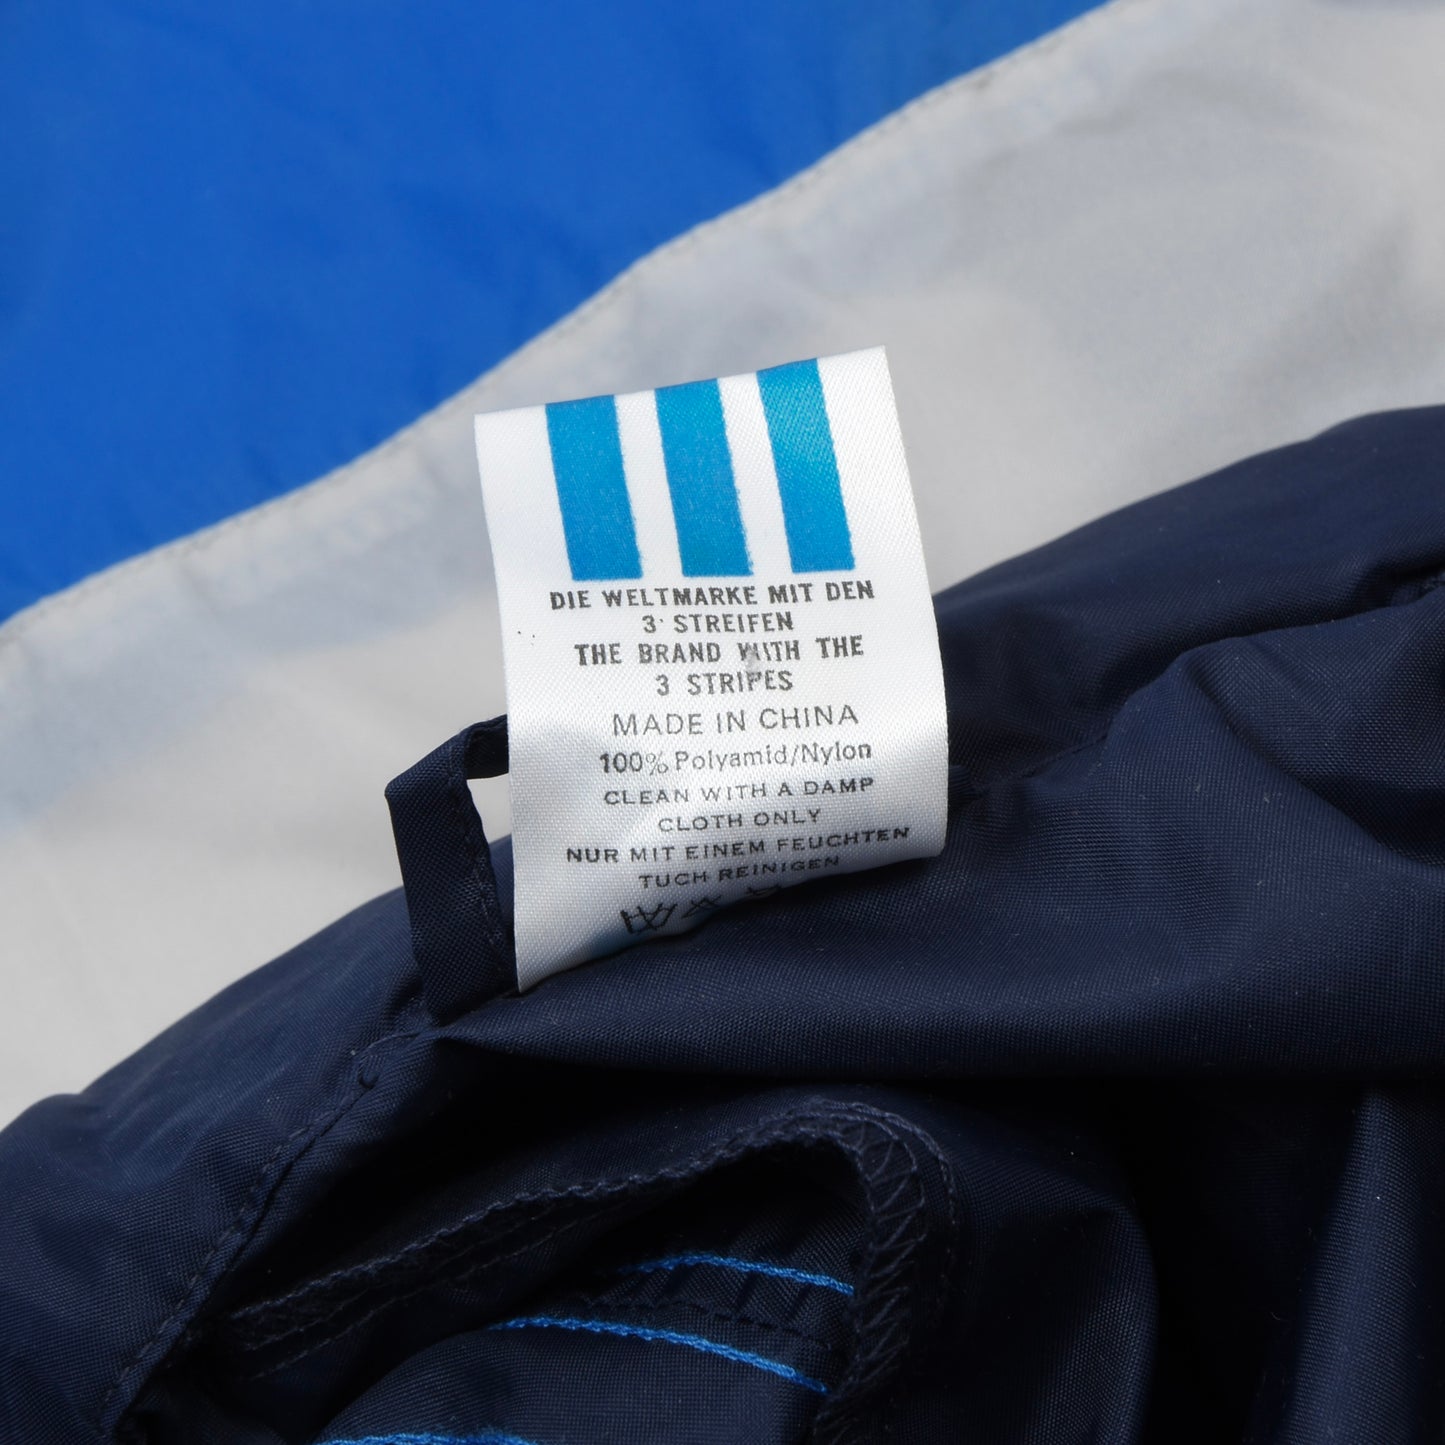 Vintage '80s Adidas Nylon Rain Jacket Size D50 - Blue Color Blocked